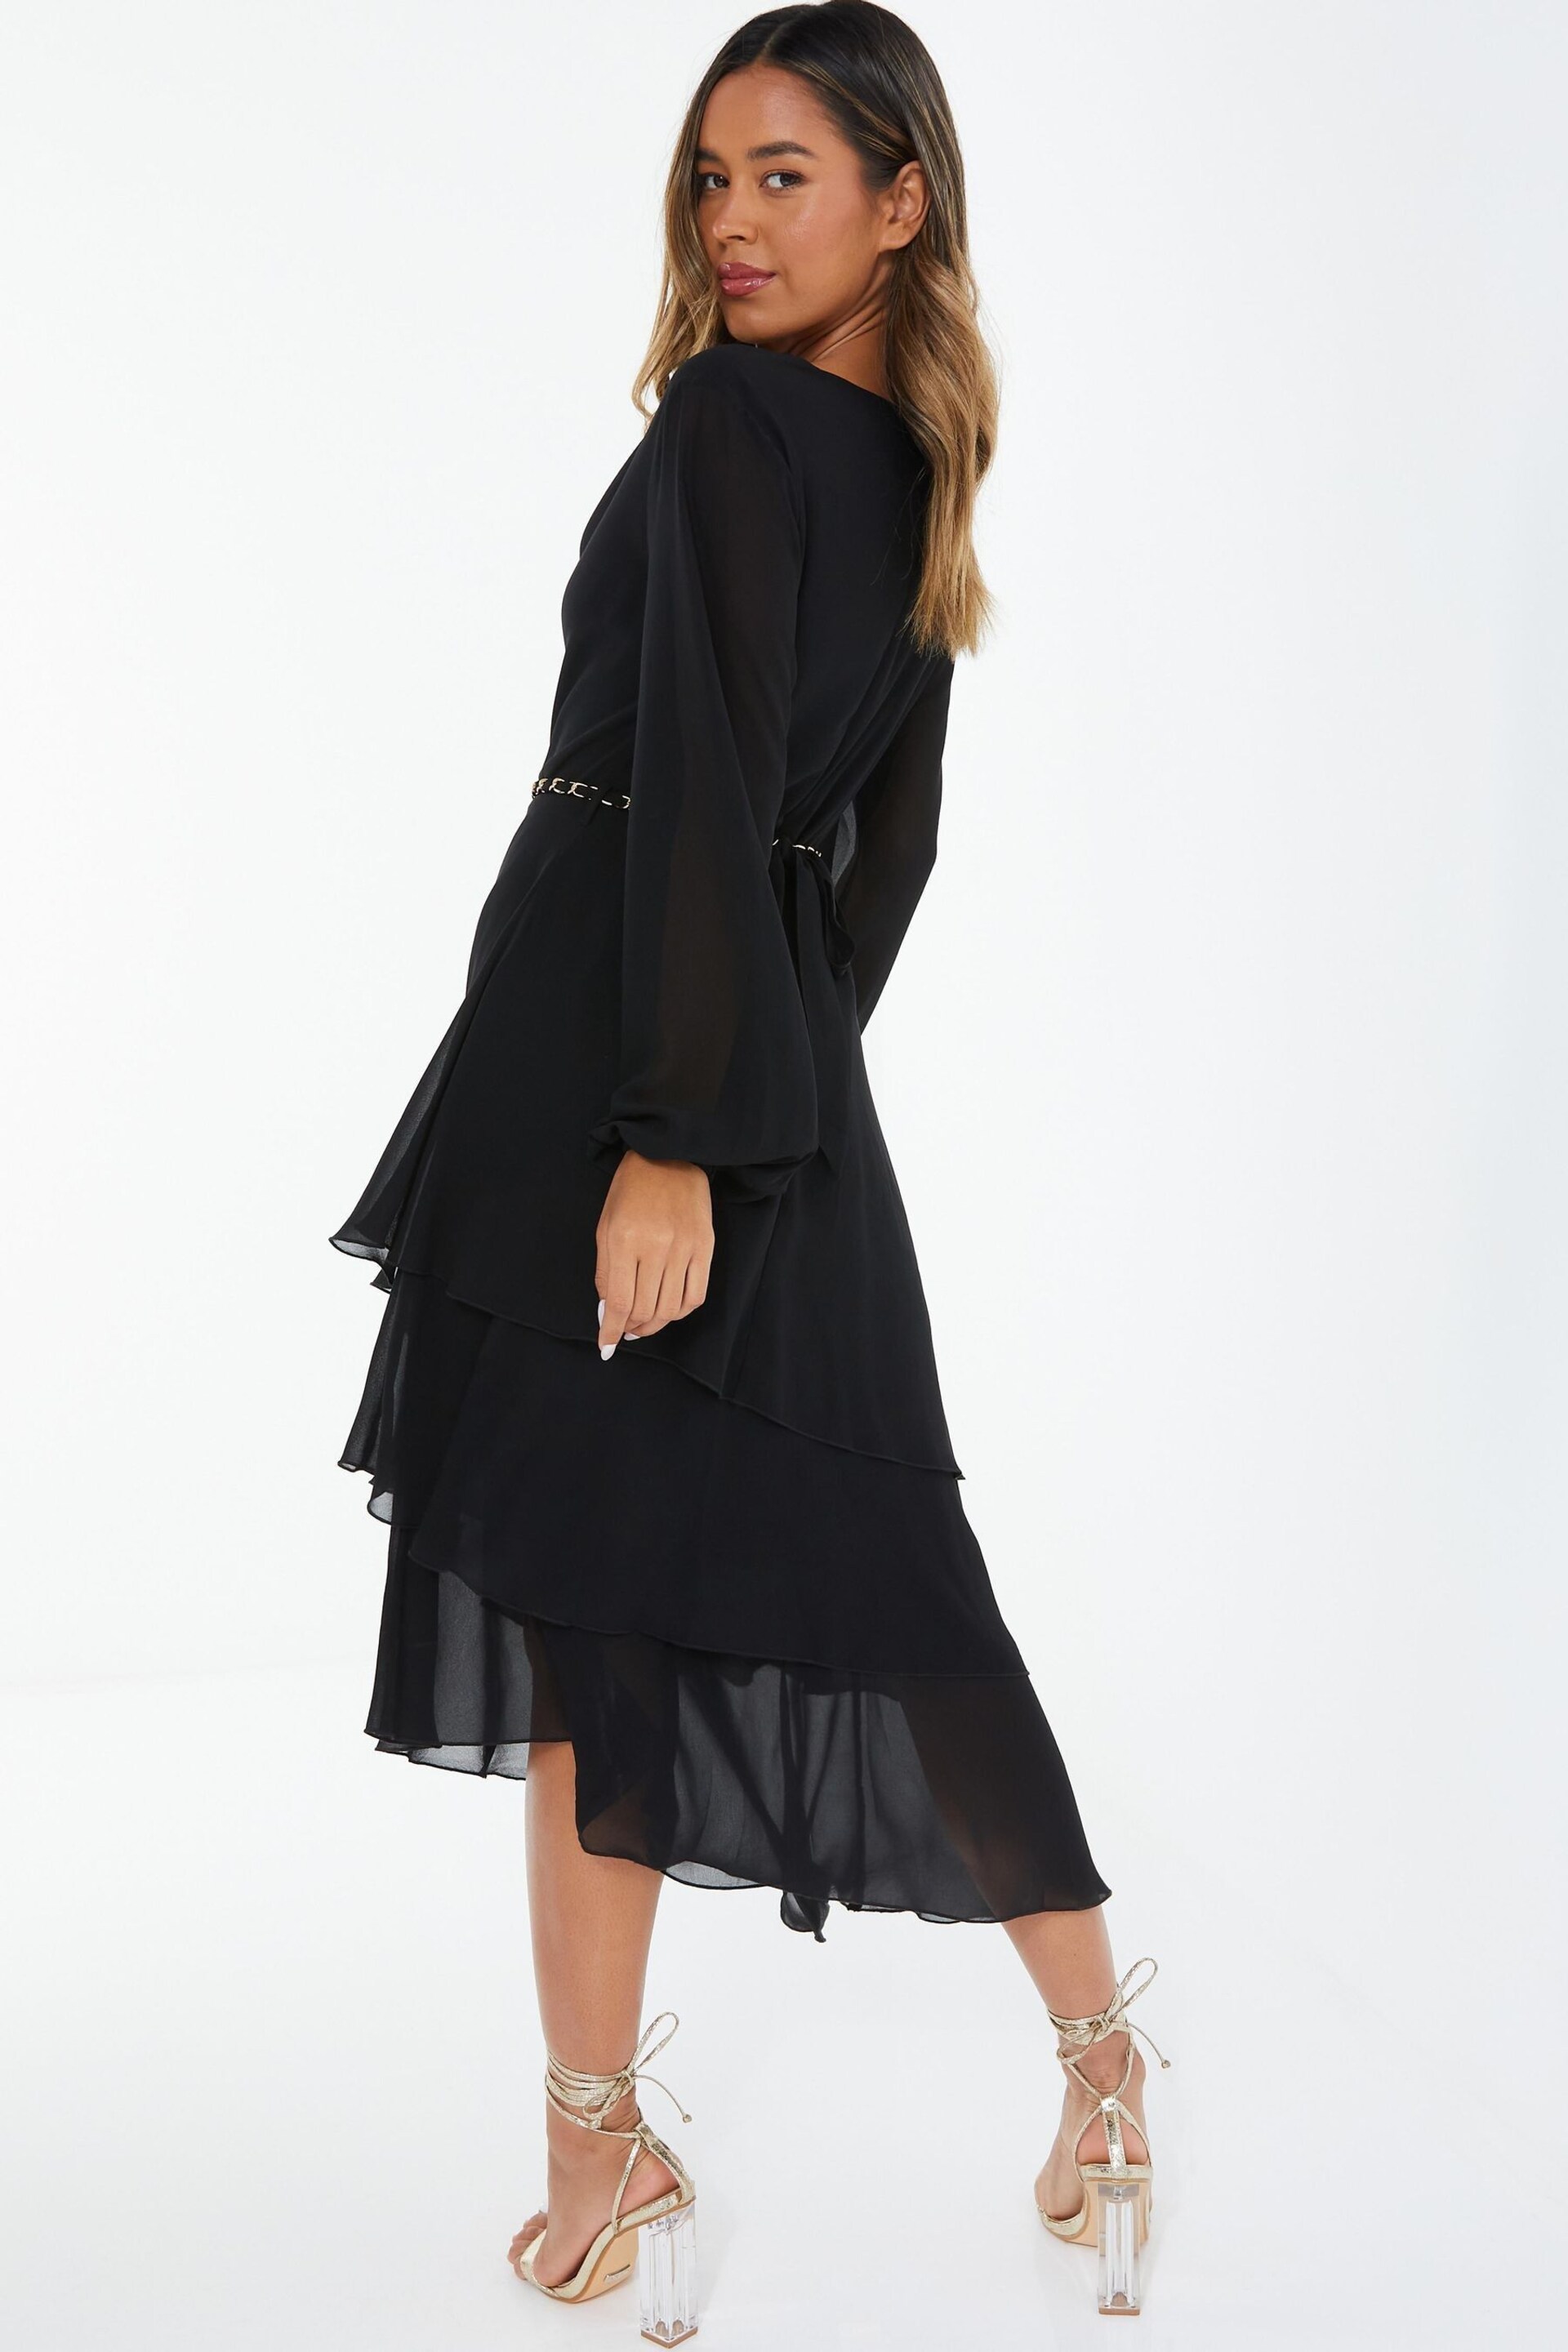 Quiz Black Chiffon Cowl Neck Long Sleeve Tiered Black Dress - Image 2 of 4